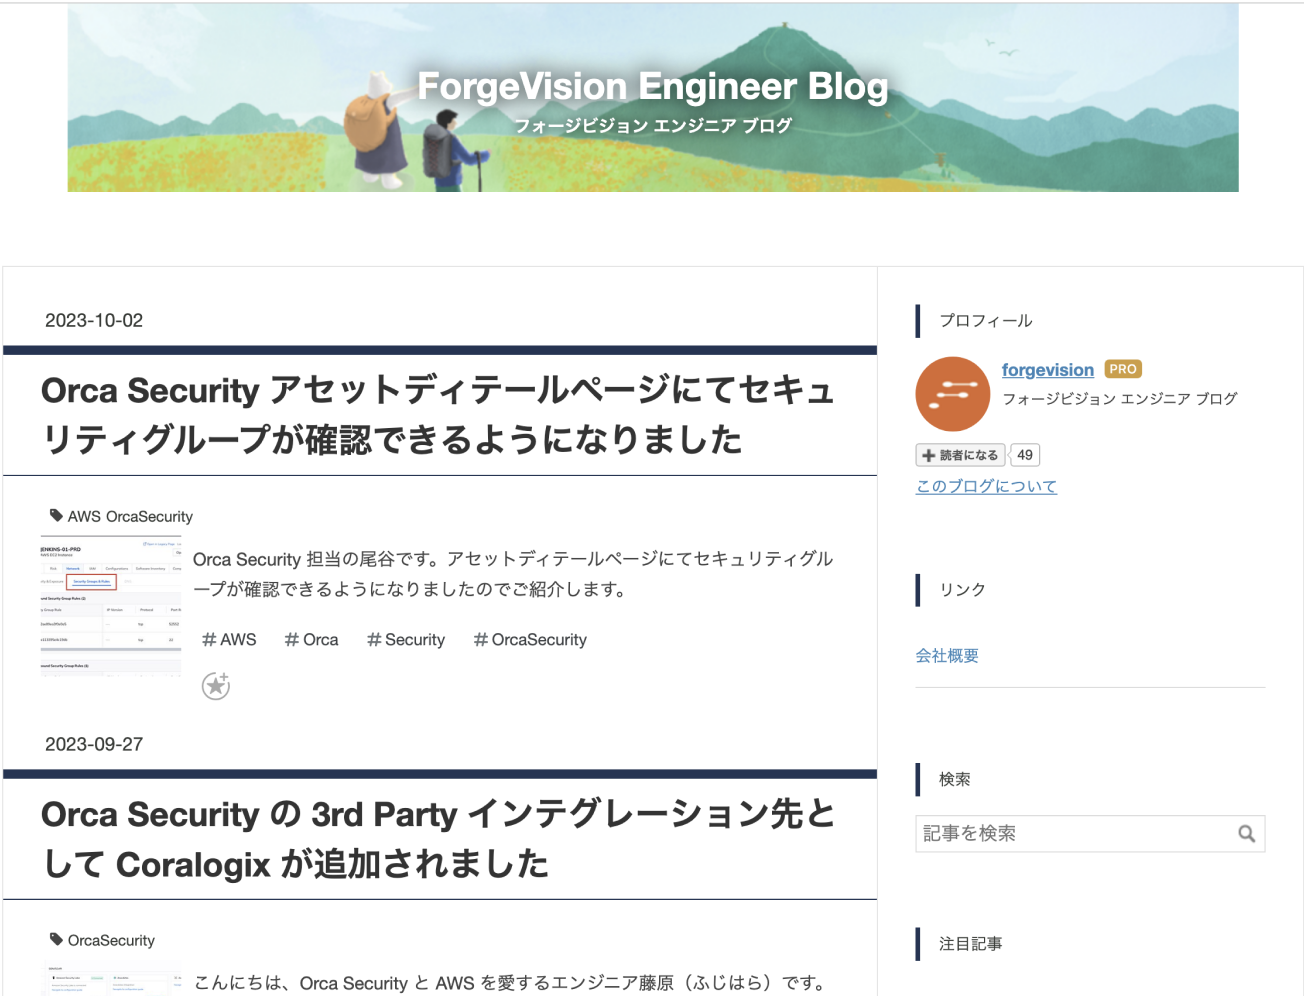 Orca Security ブログ記事